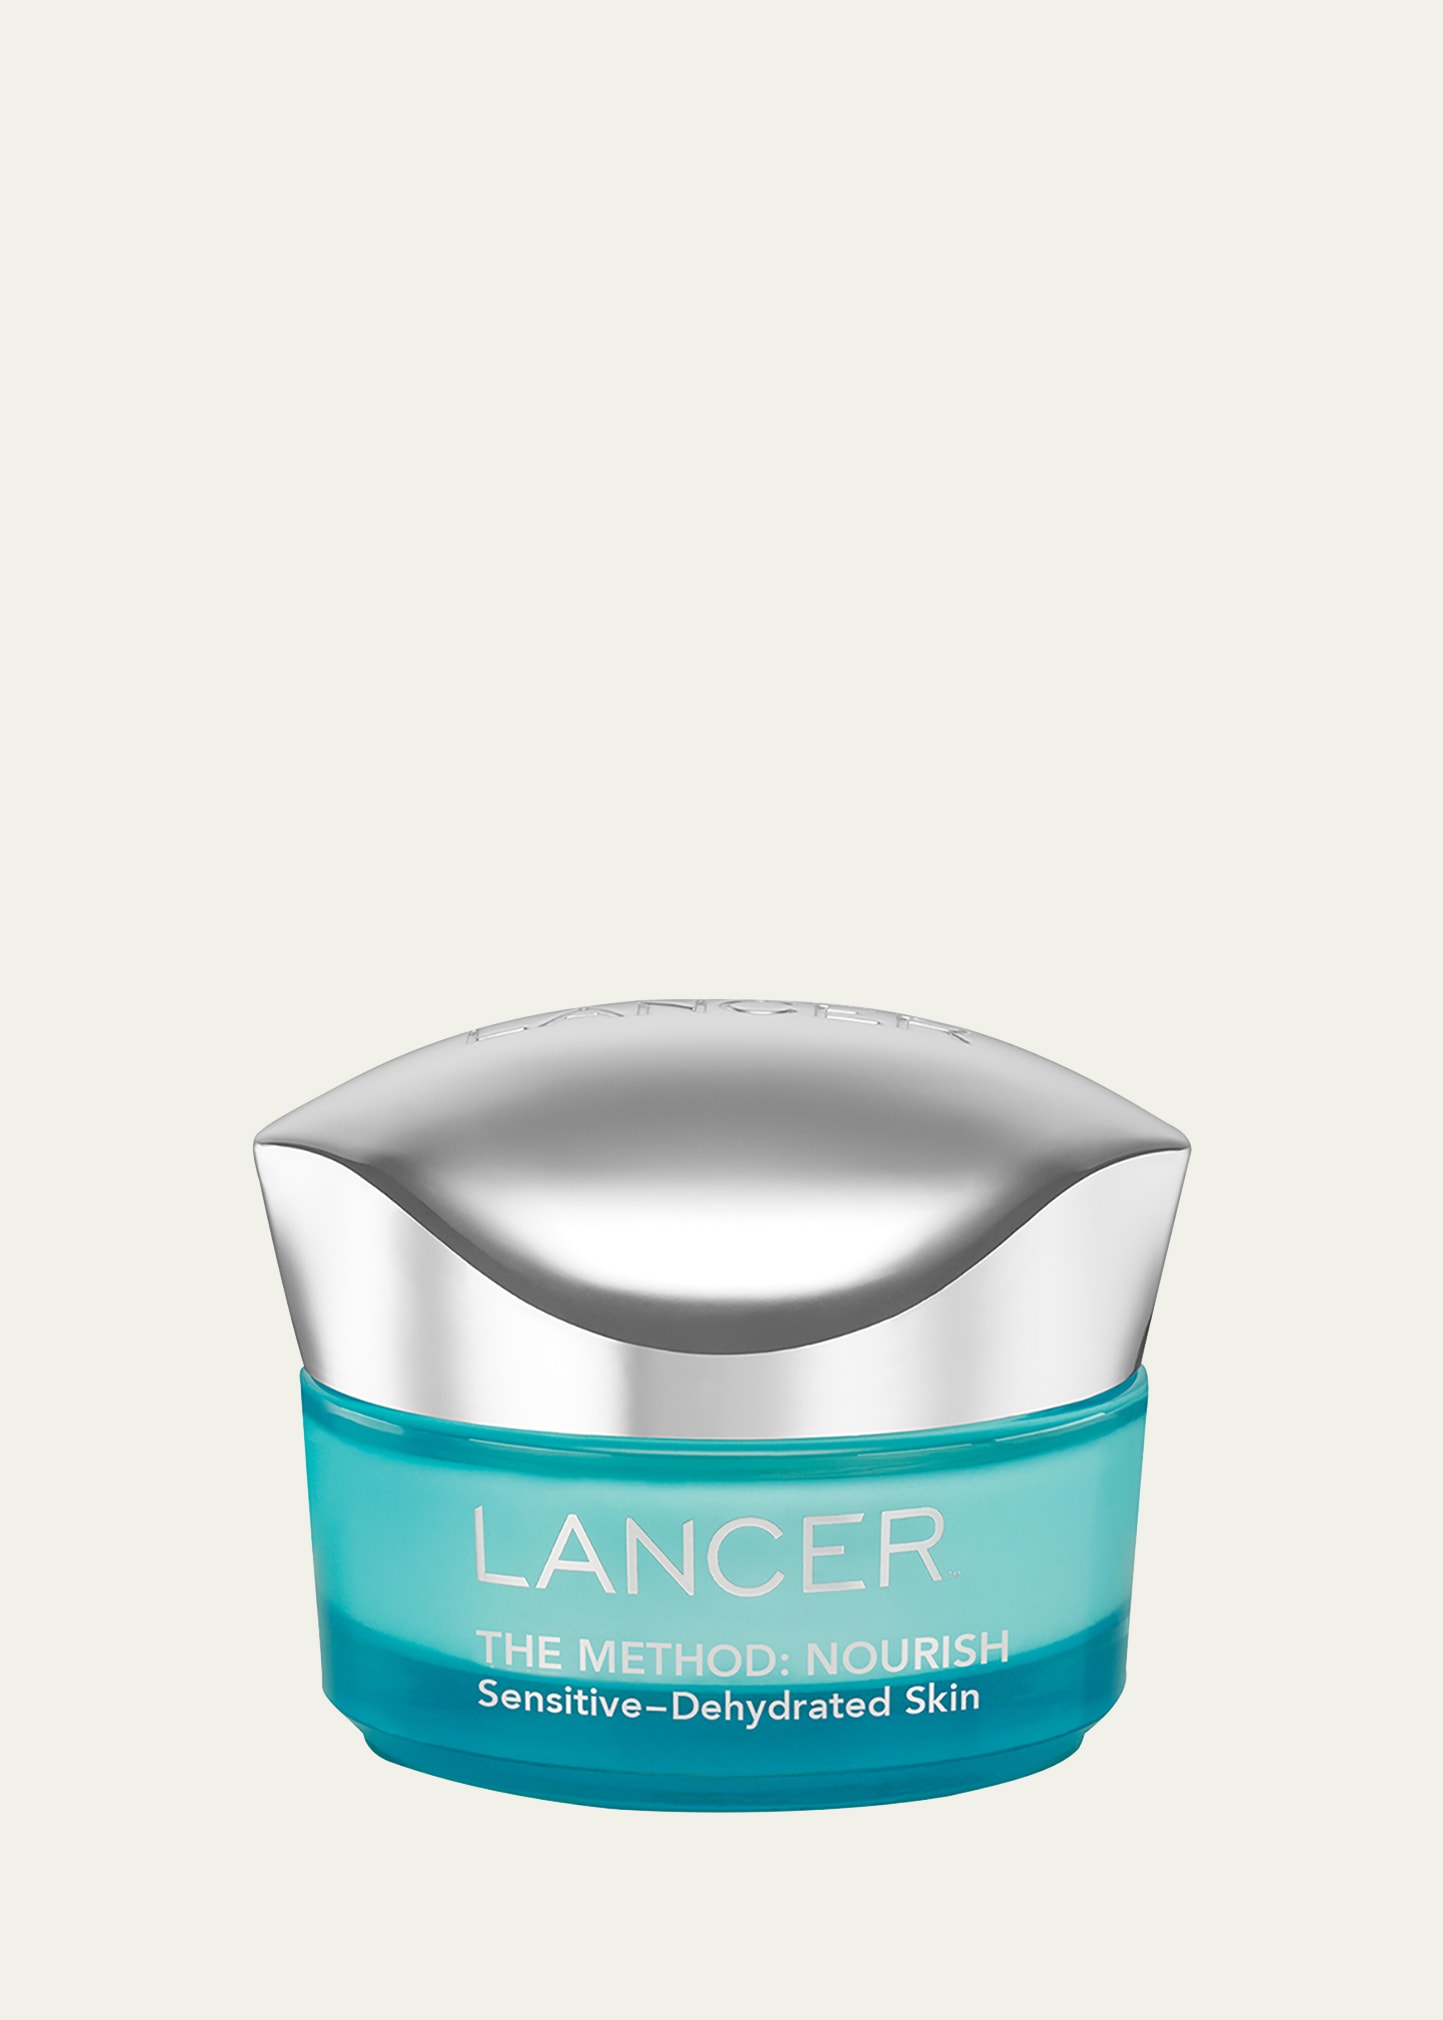 Lancer The Method: Nourish Sensitive-Dehydrated Skin, 1.7 oz.